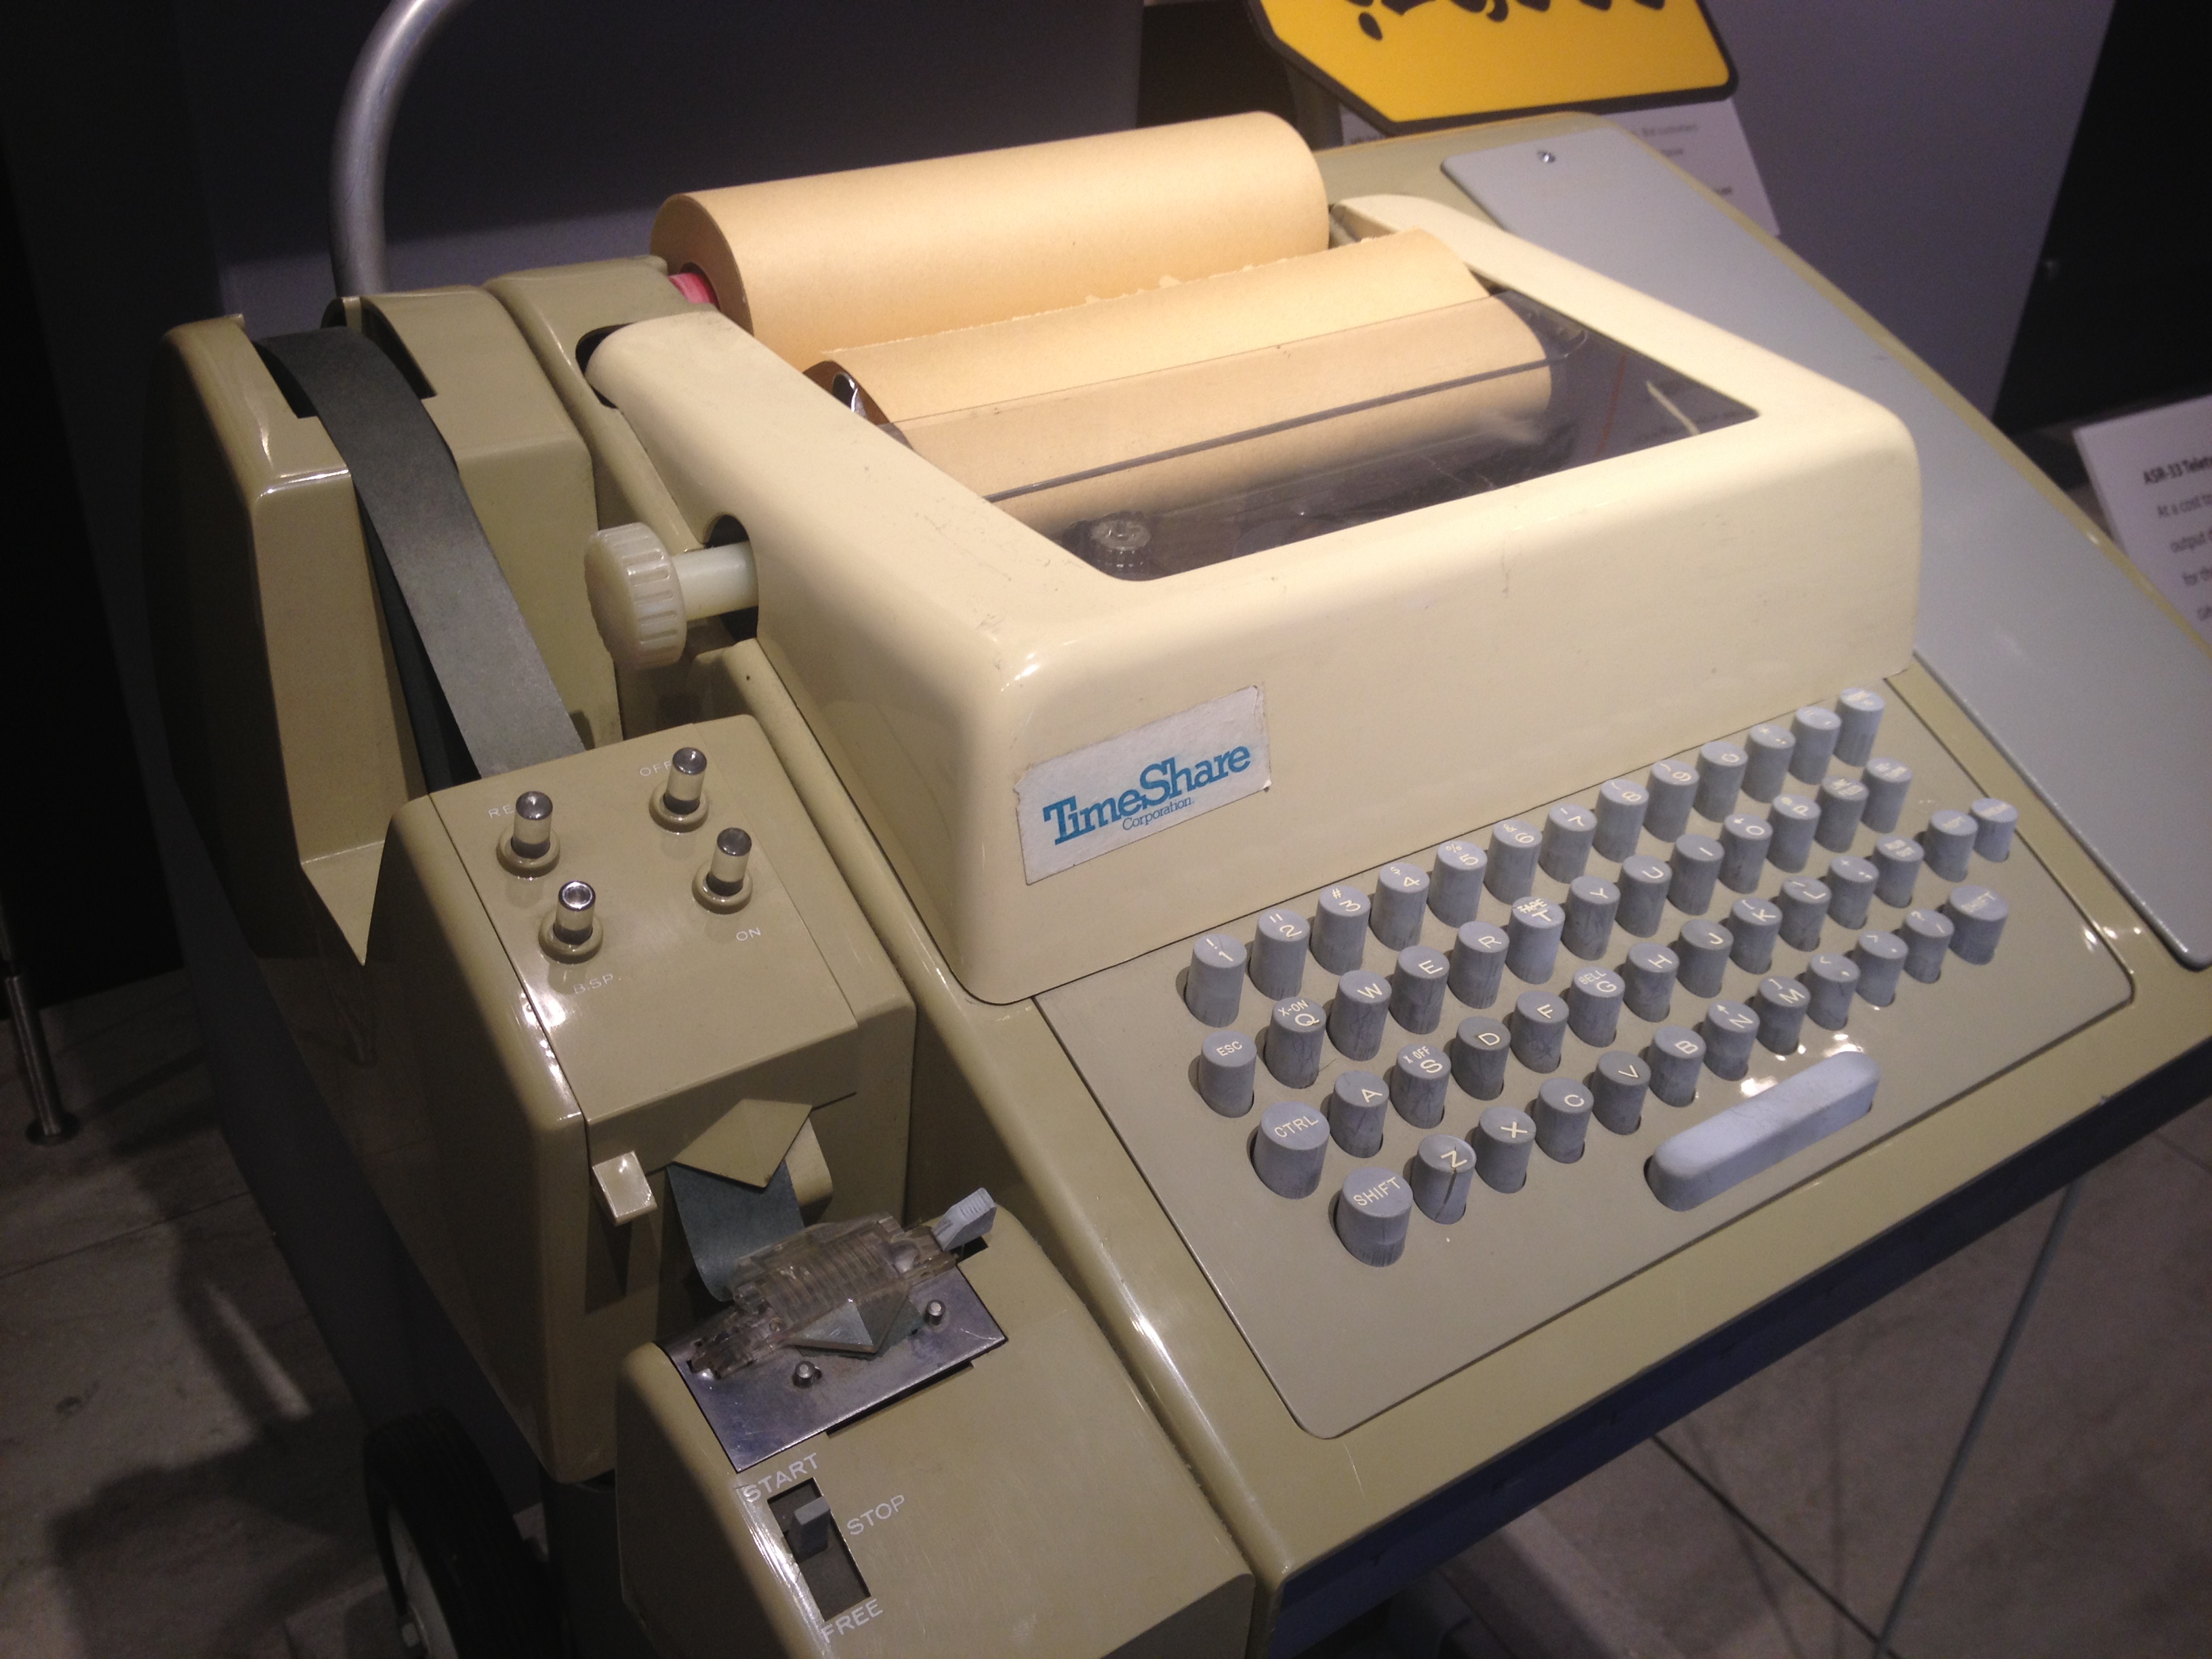 An old teleprinter machine.